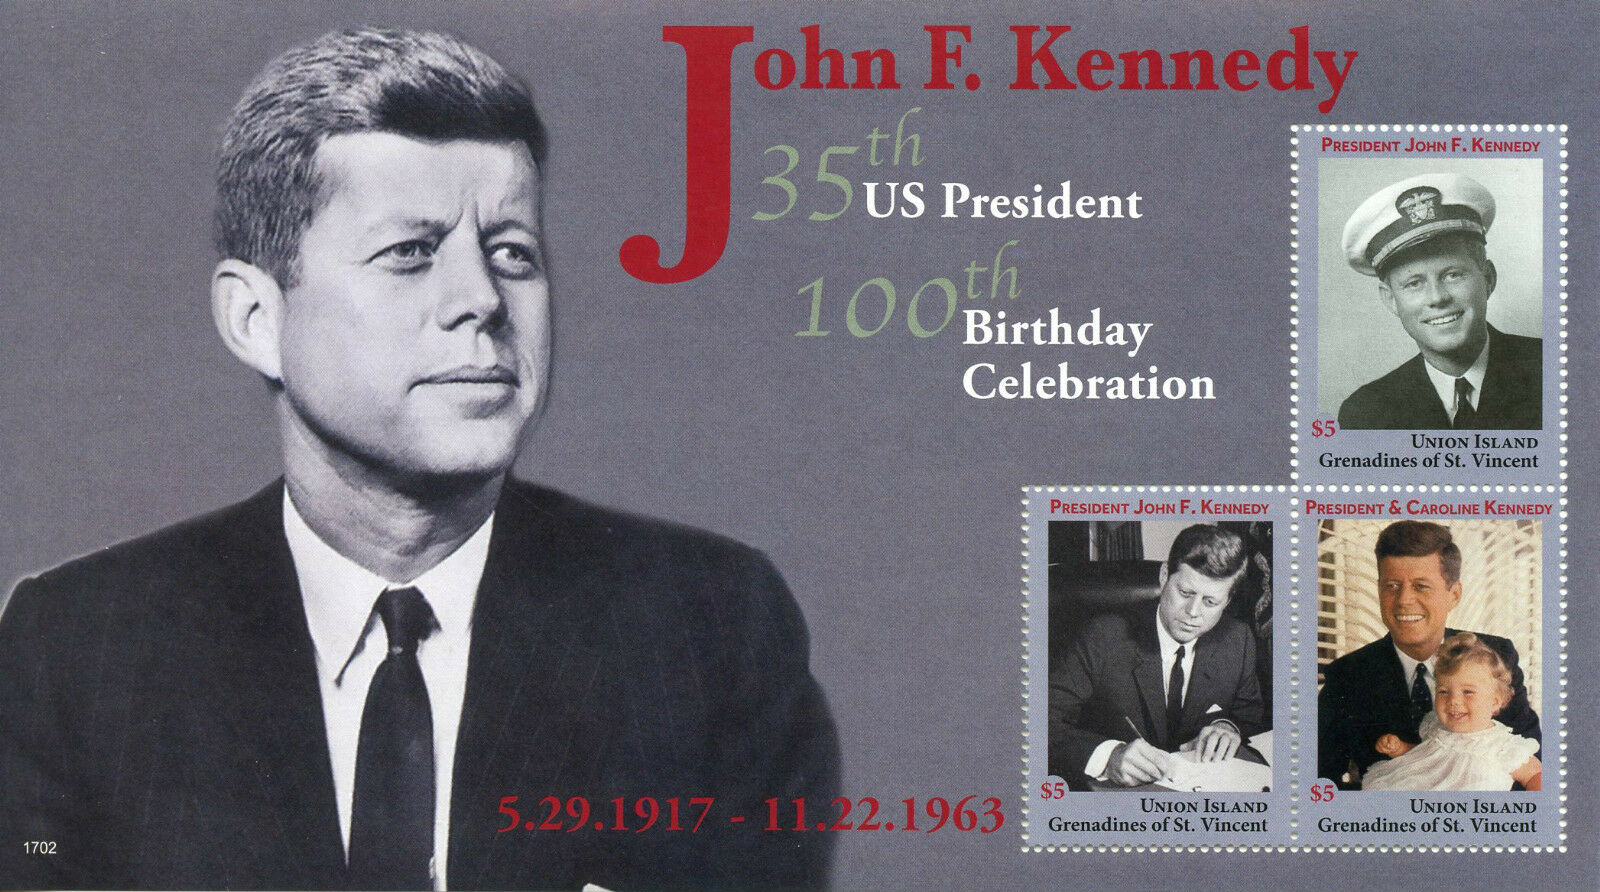 Union Island Gren St Vincent 2017 MNH JFK Stamps John F Kennedy 100th 3v M/S II